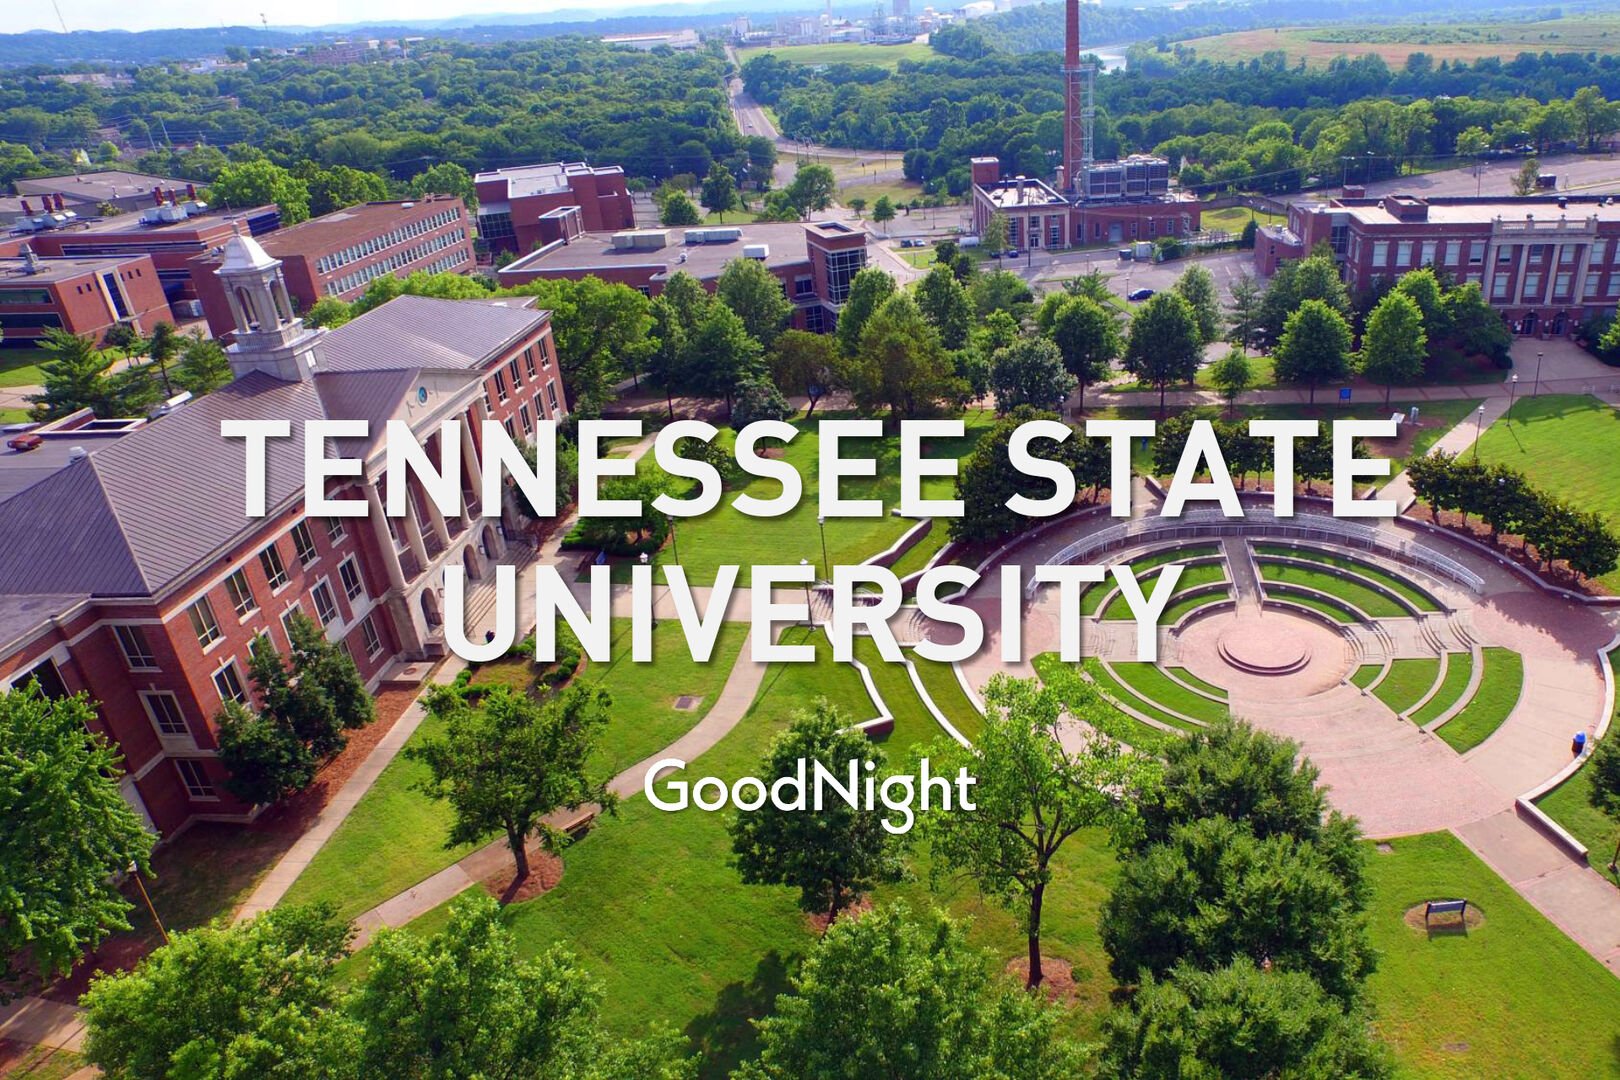 7 mins: Tennessee State University